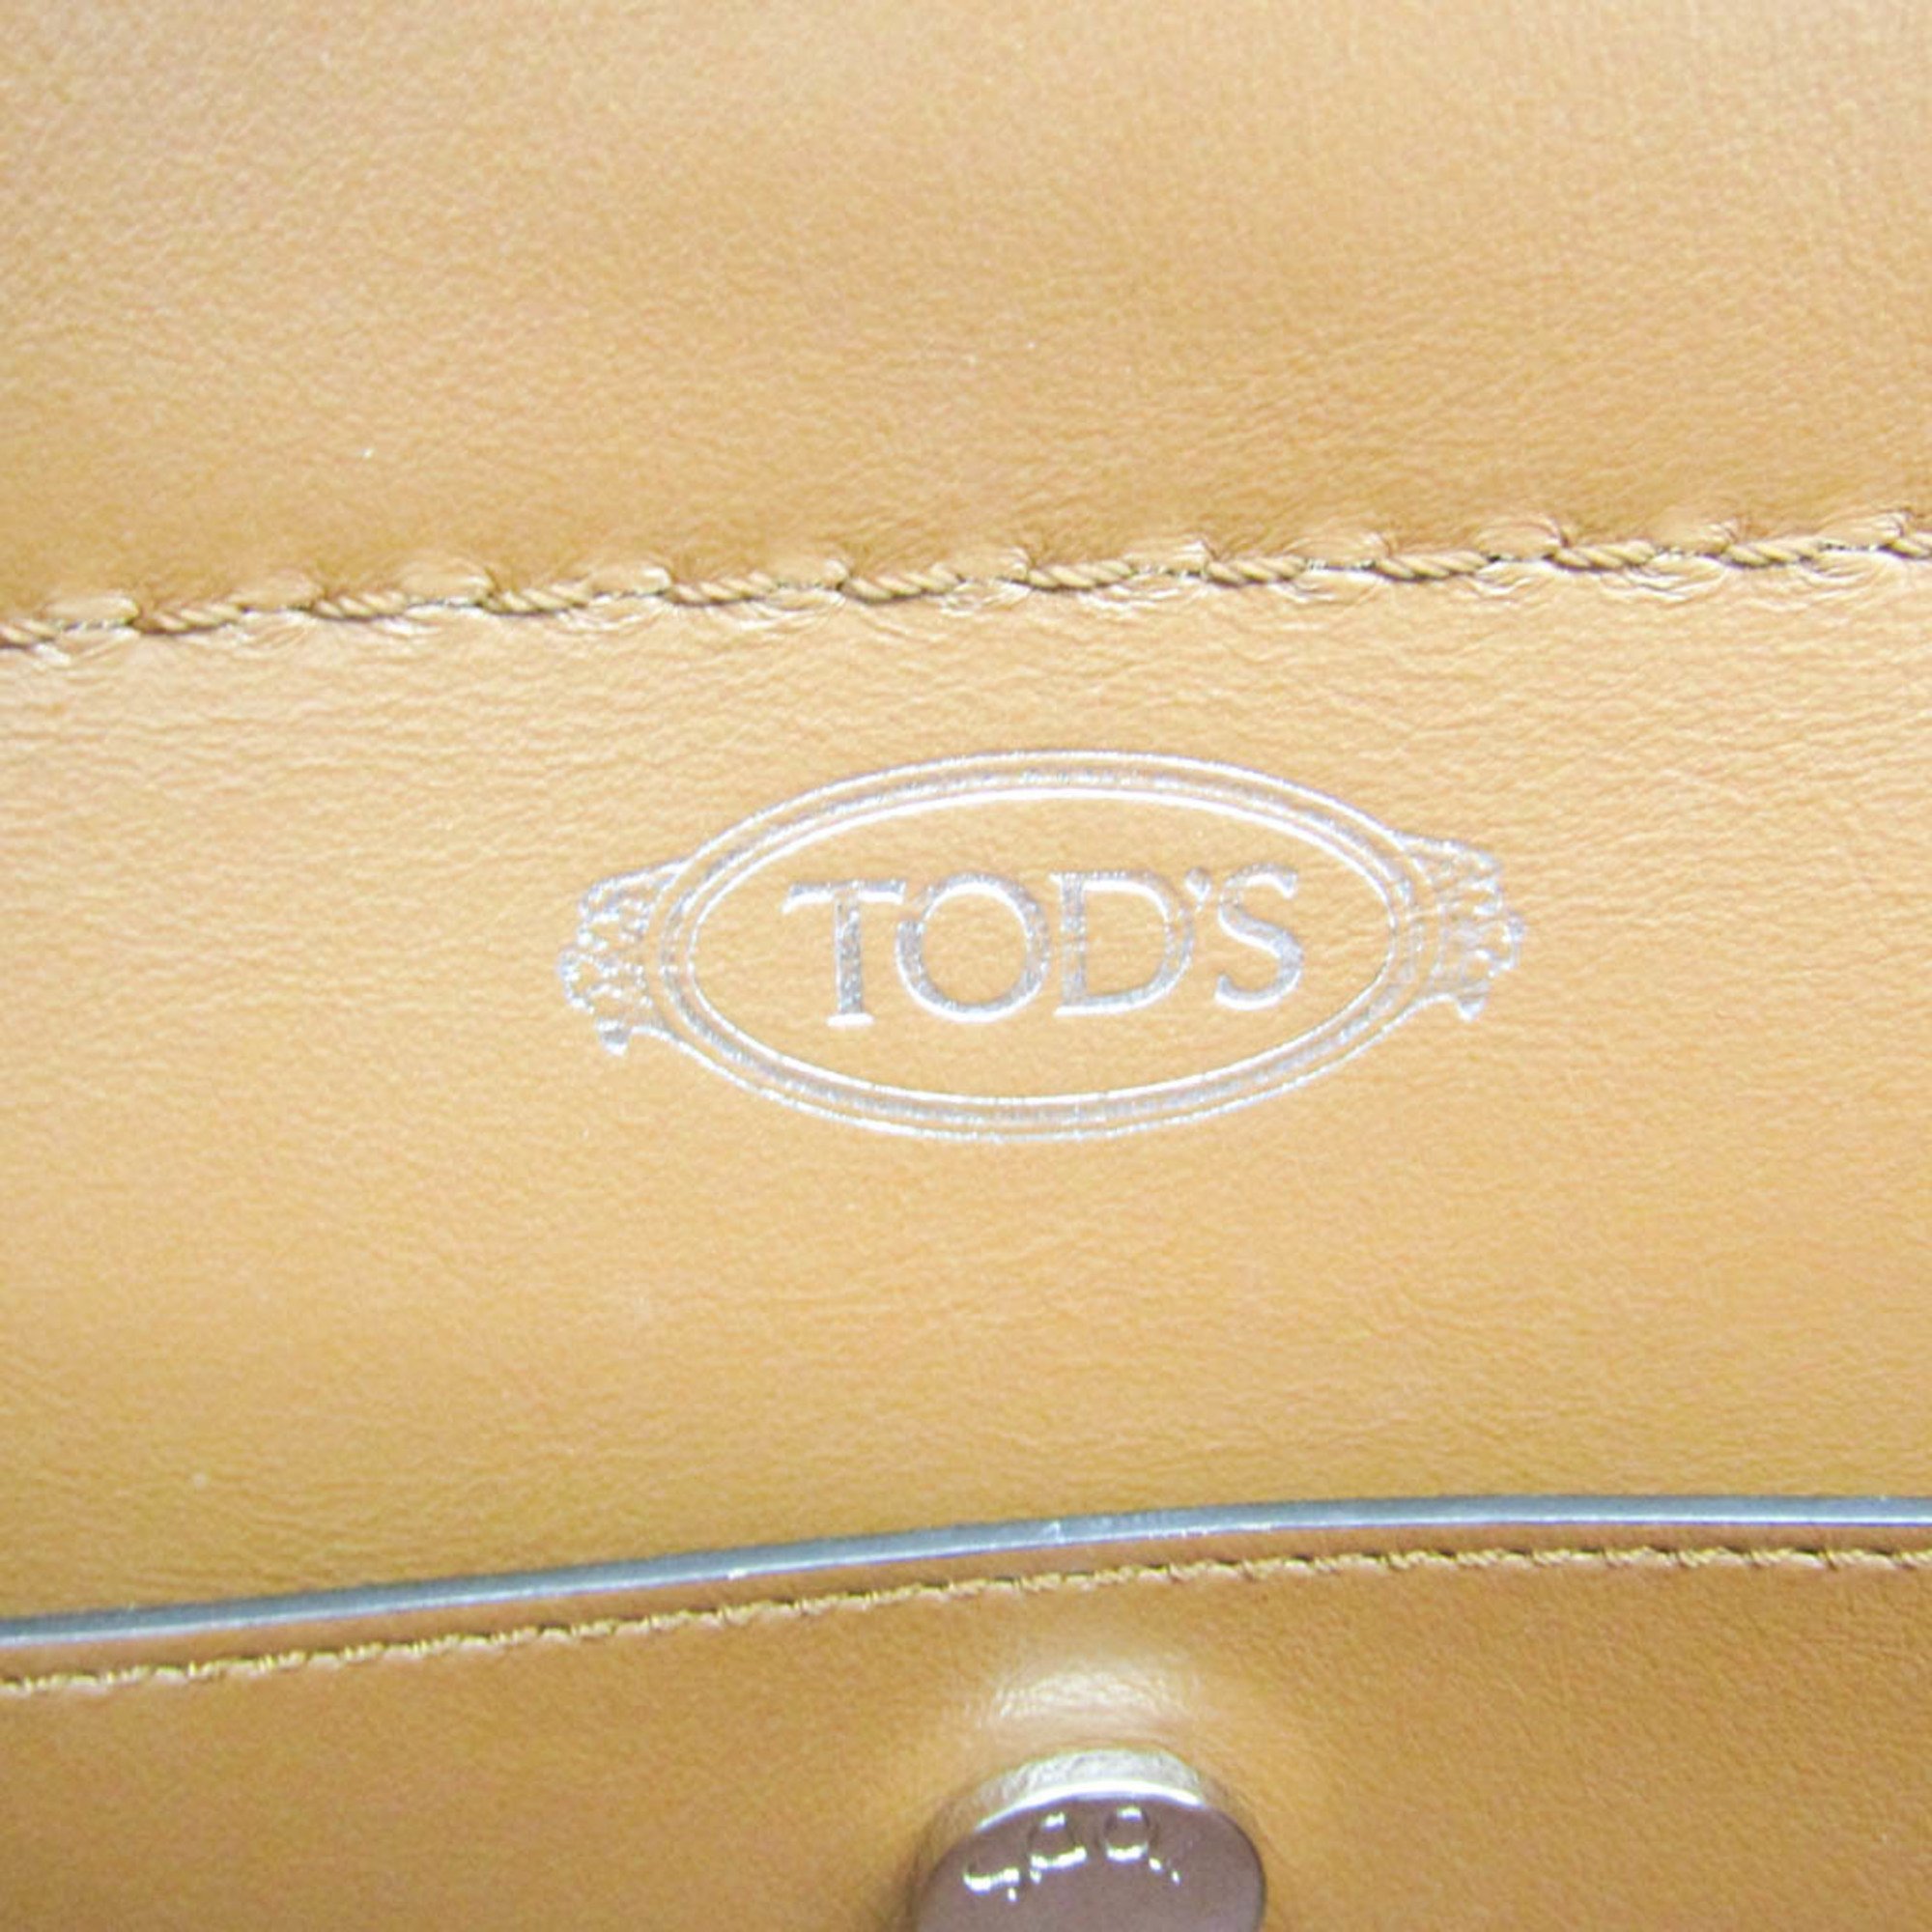 Tod's Women's Denim,Leather Handbag Brown,Navy